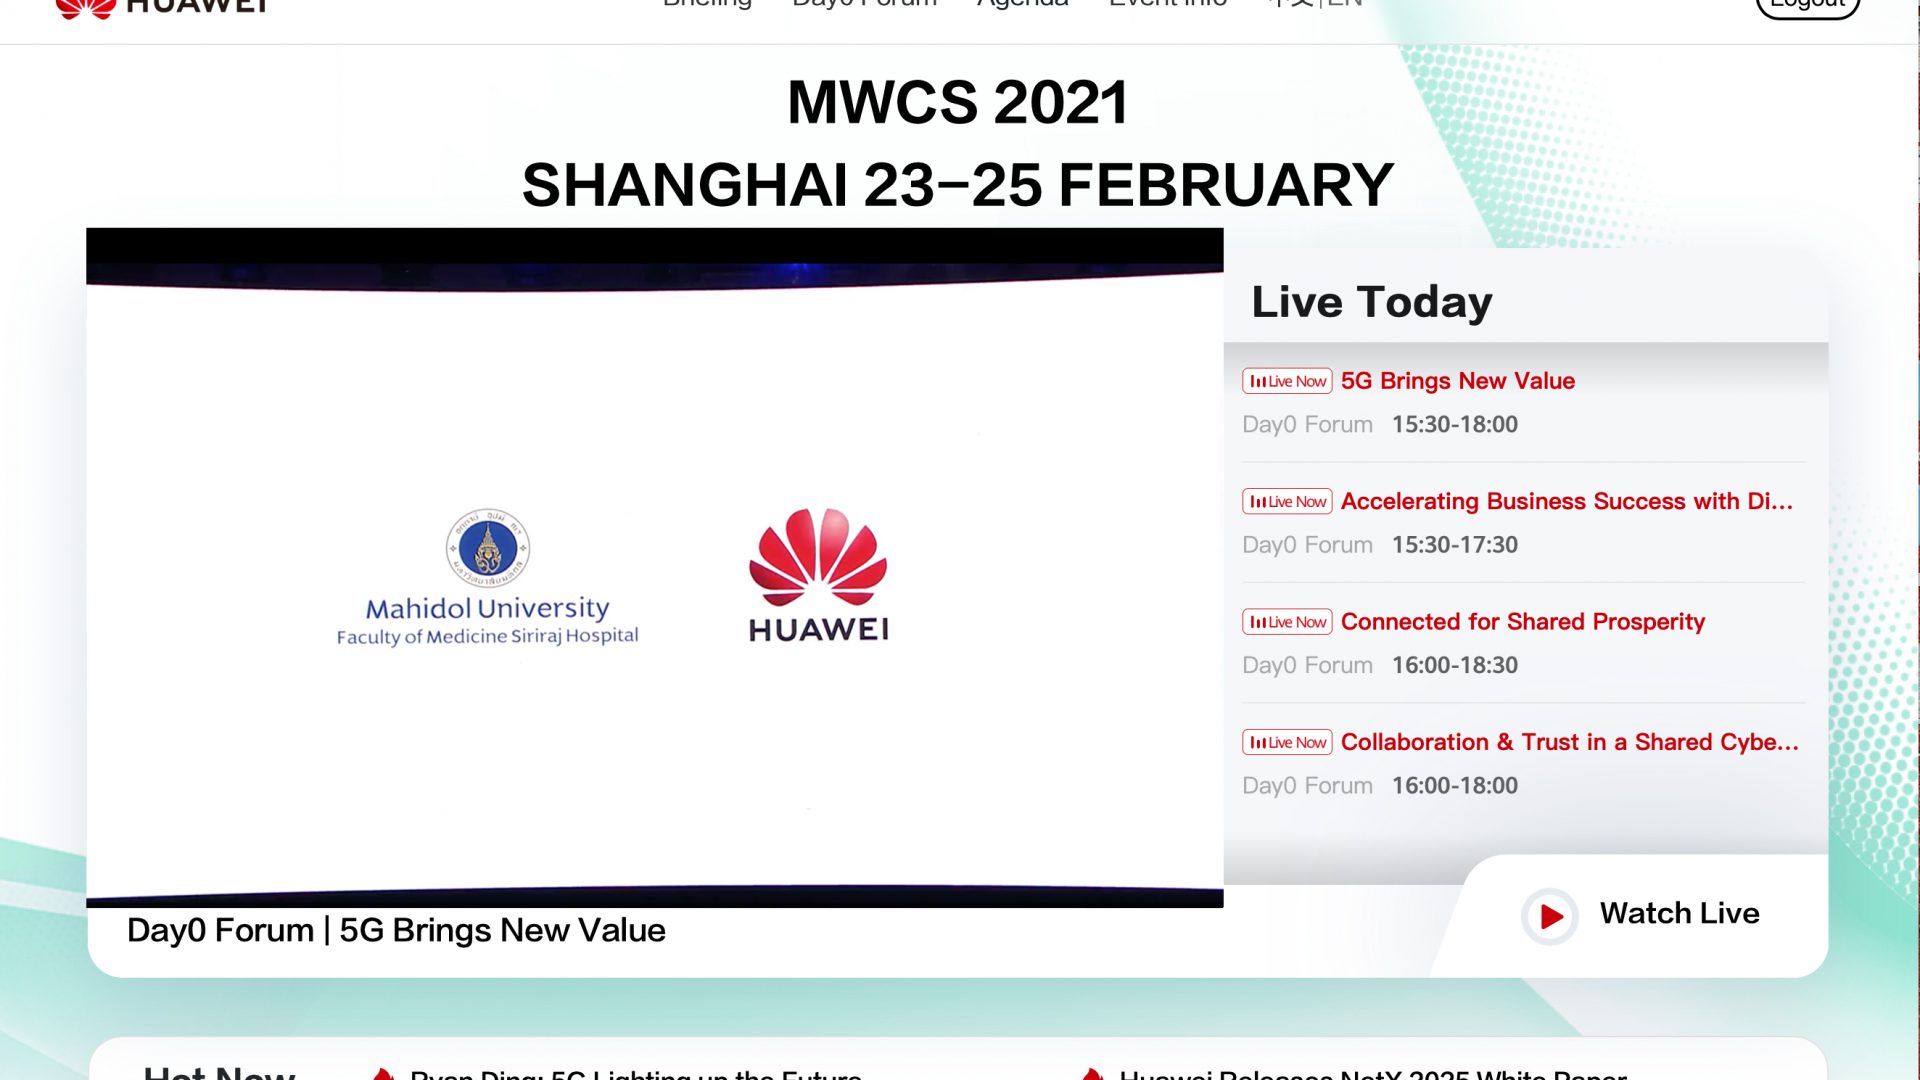 Mobile World Congress Shanghai 2021